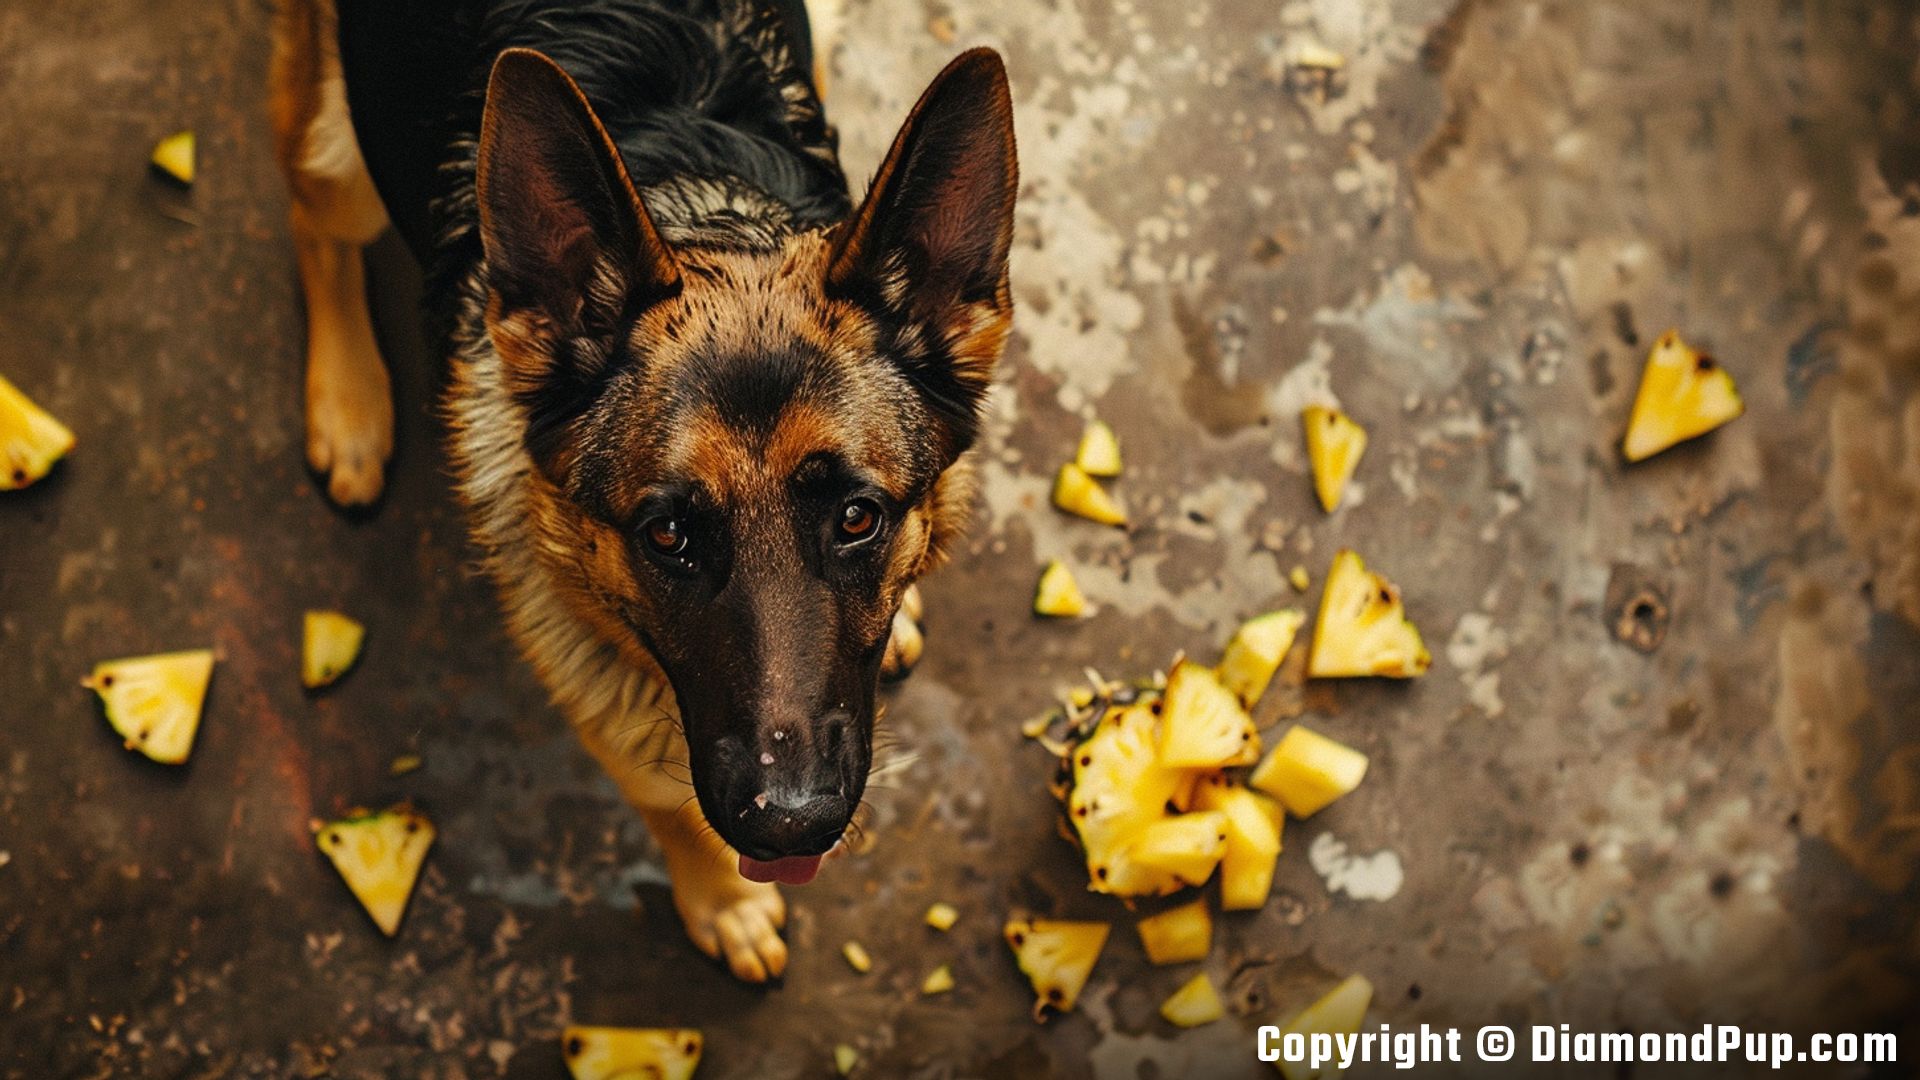 Photograph of a Playful German Shepherd Eating Pineapple